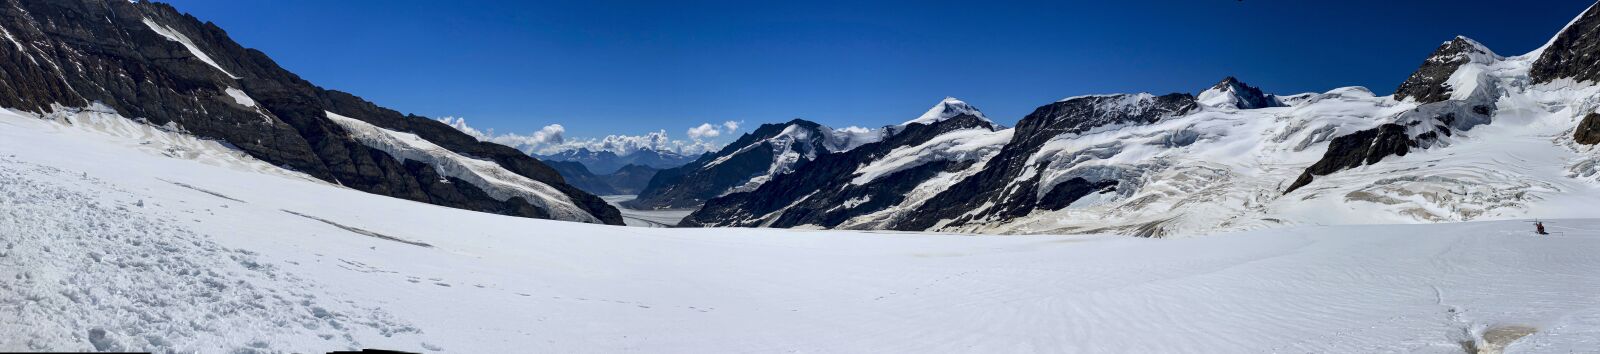 iPhone 11 Pro back camera 6mm f/2 sample photo. Jungfraujoch, aletsch glacier, switzerland photography